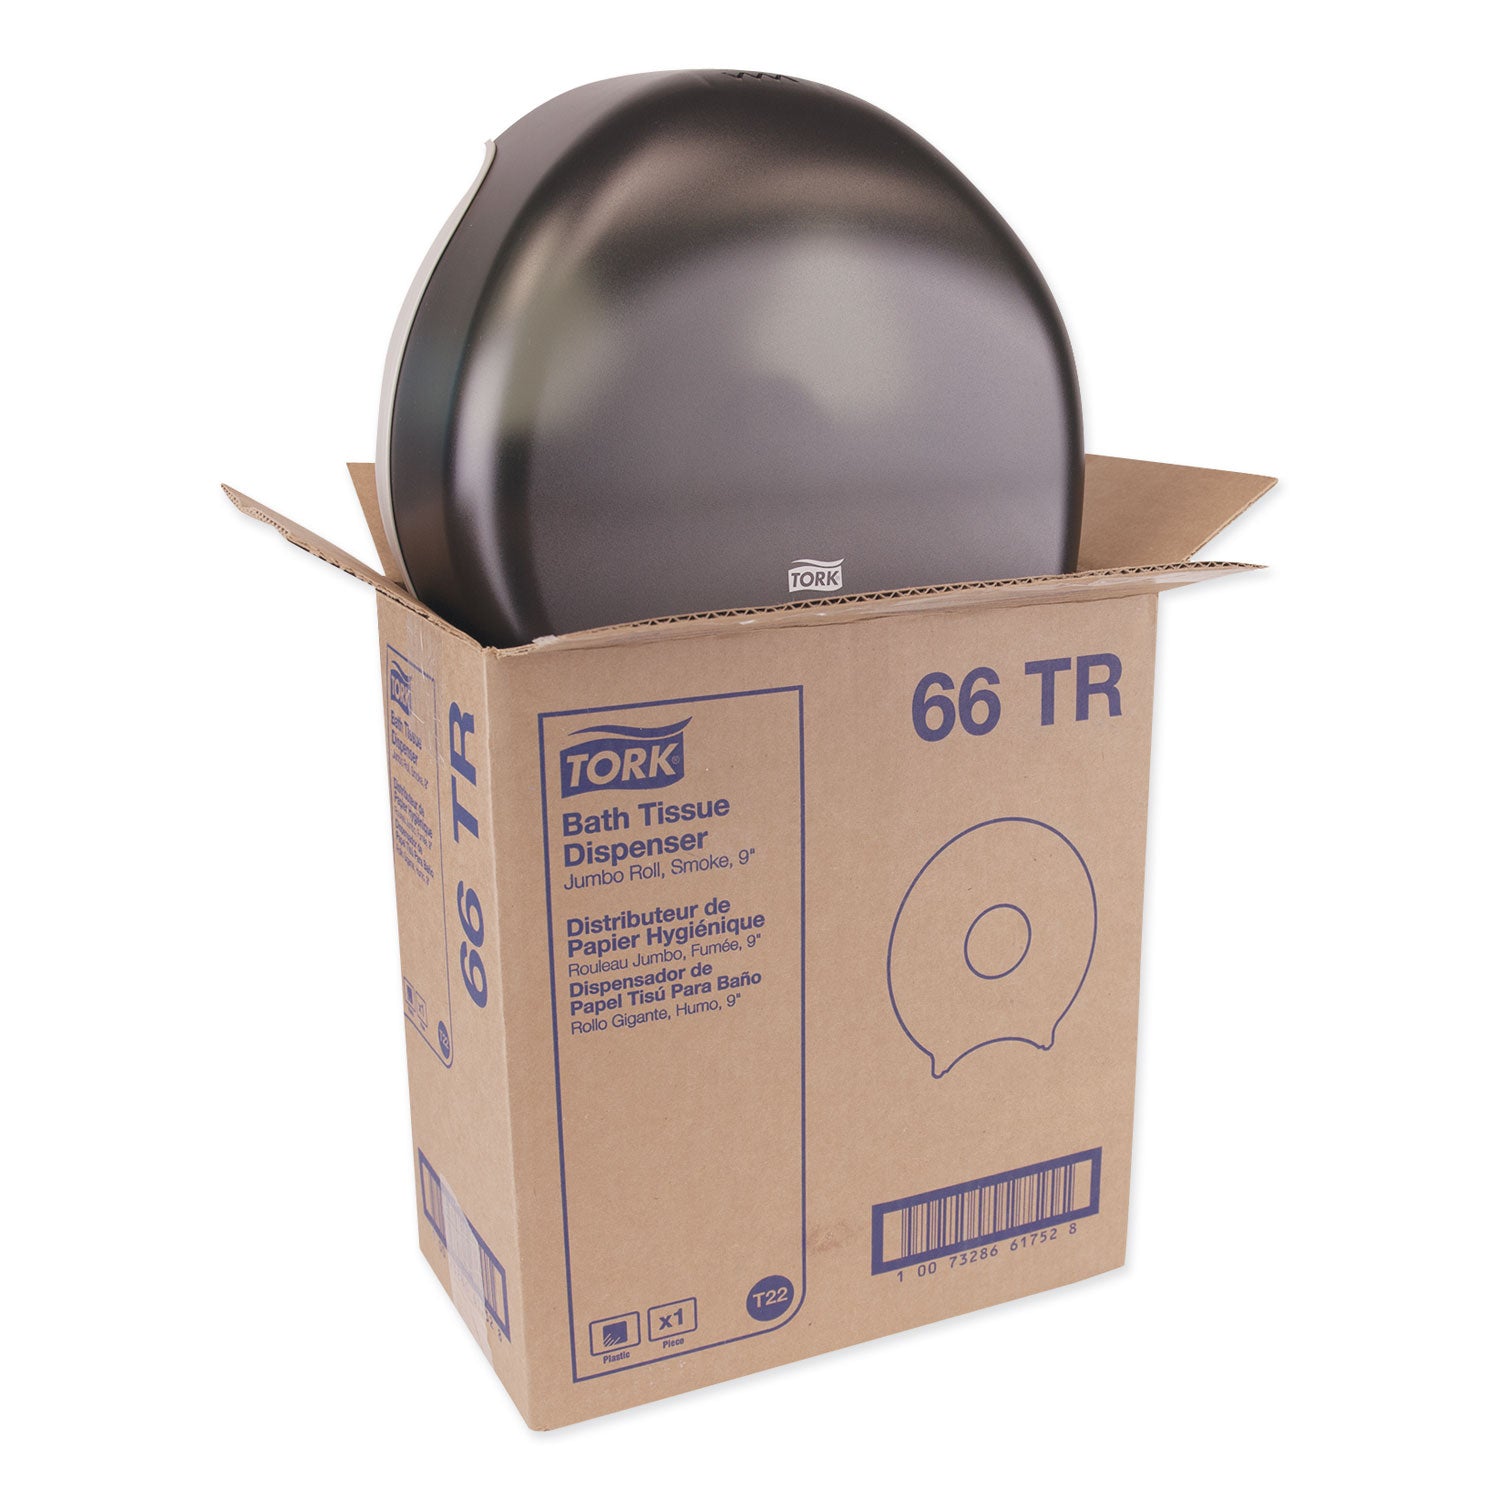 jumbo-bath-tissue-dispenser-1063-x-575-x-12-smoke_trk66tr - 3